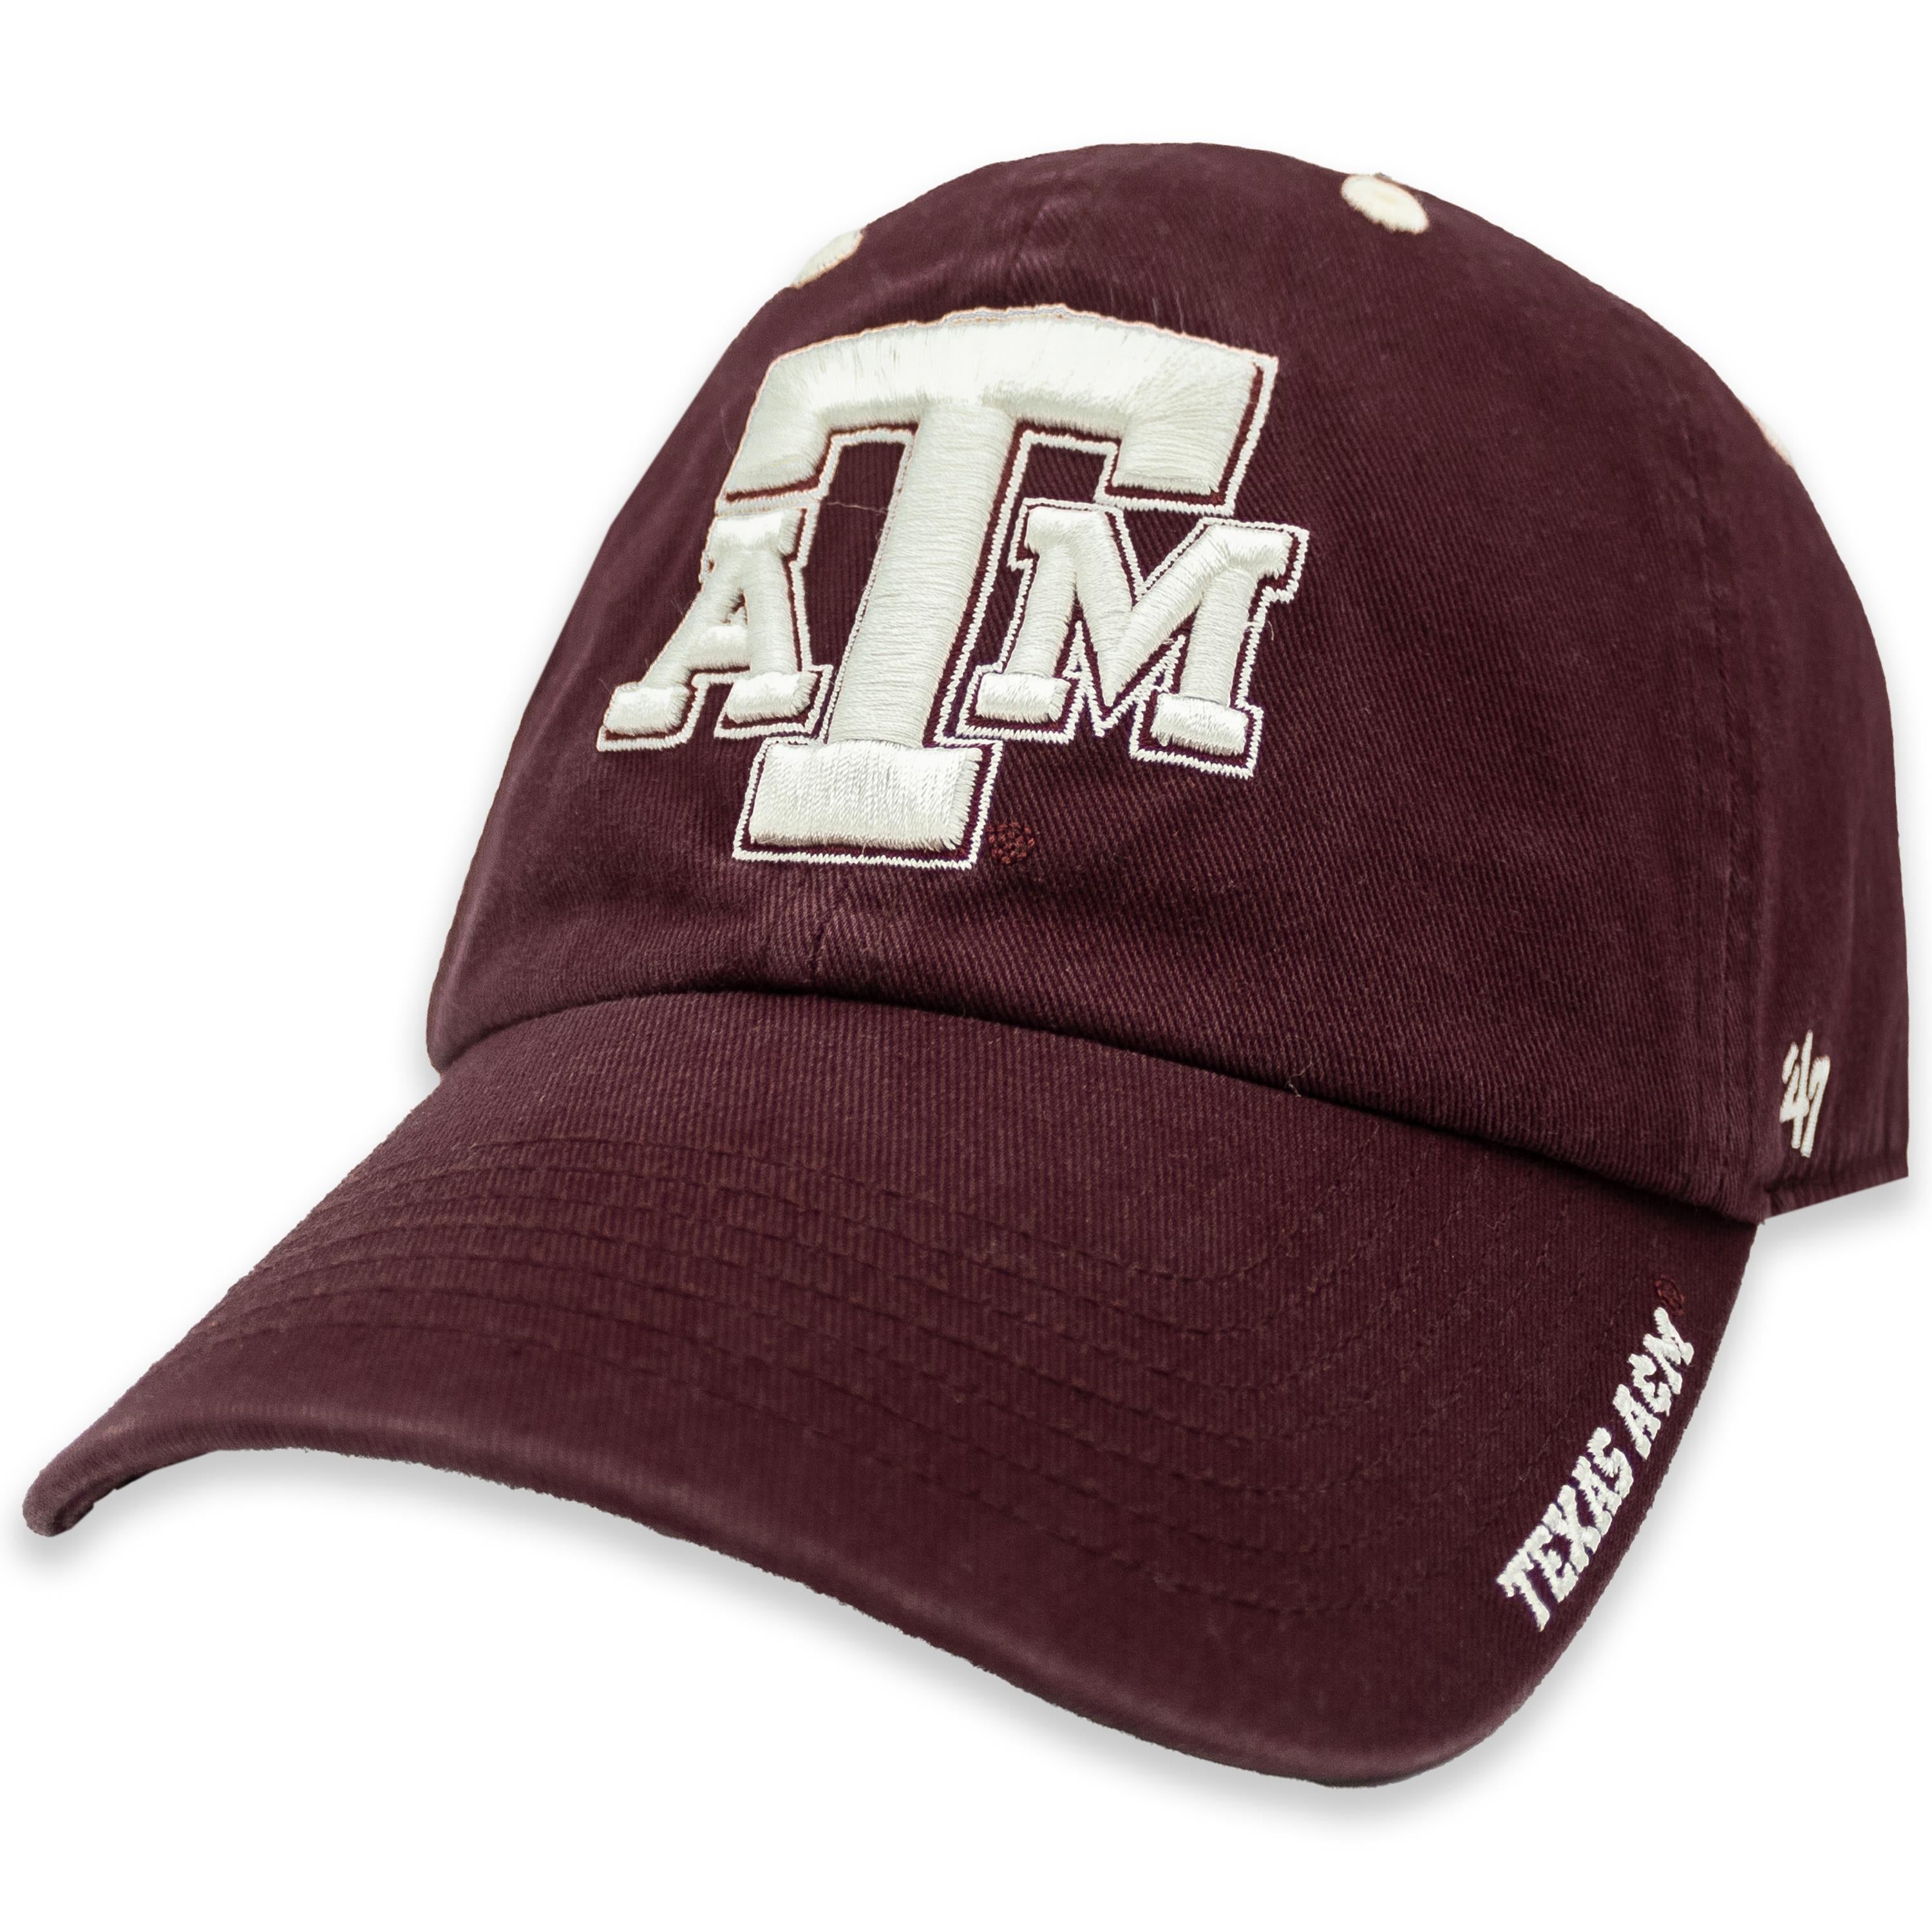 SEC Baseball on X: Texas A&M: get rid of those maroon pins